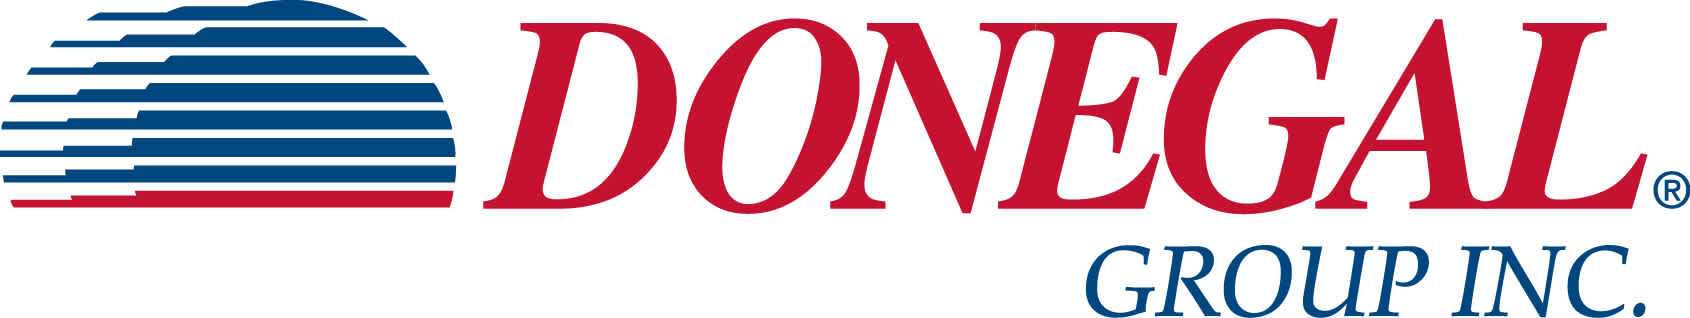 Logo of Donegal insurance company